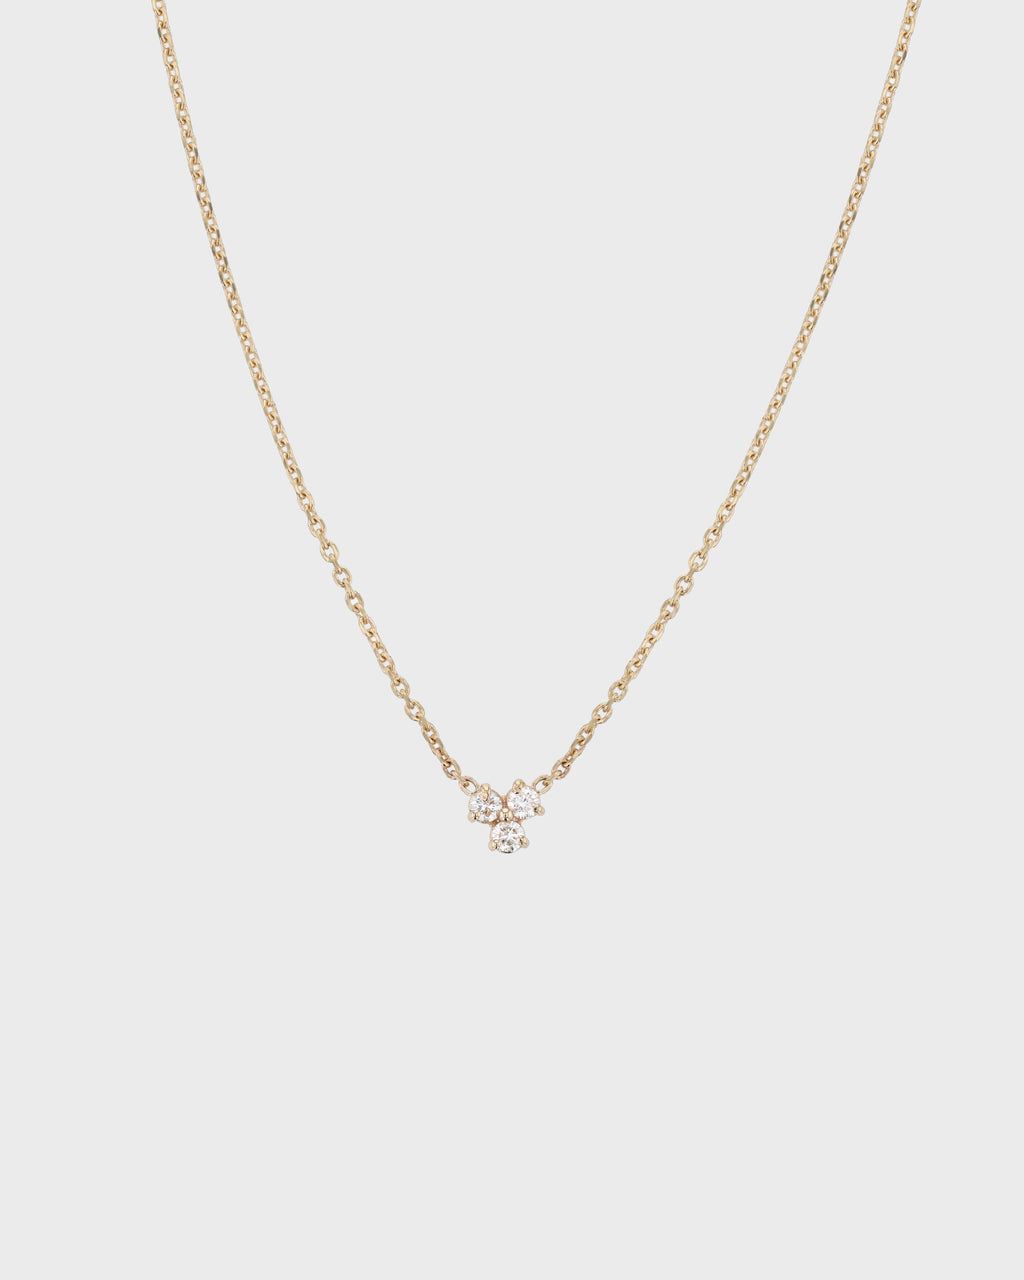 Diamond Trio Droplet Necklace, 14K Gold Floating Diamond Necklace, 14K Gold  Delicate Diamond Jewelry, Minimalist Petite Diamond Necklace - Etsy